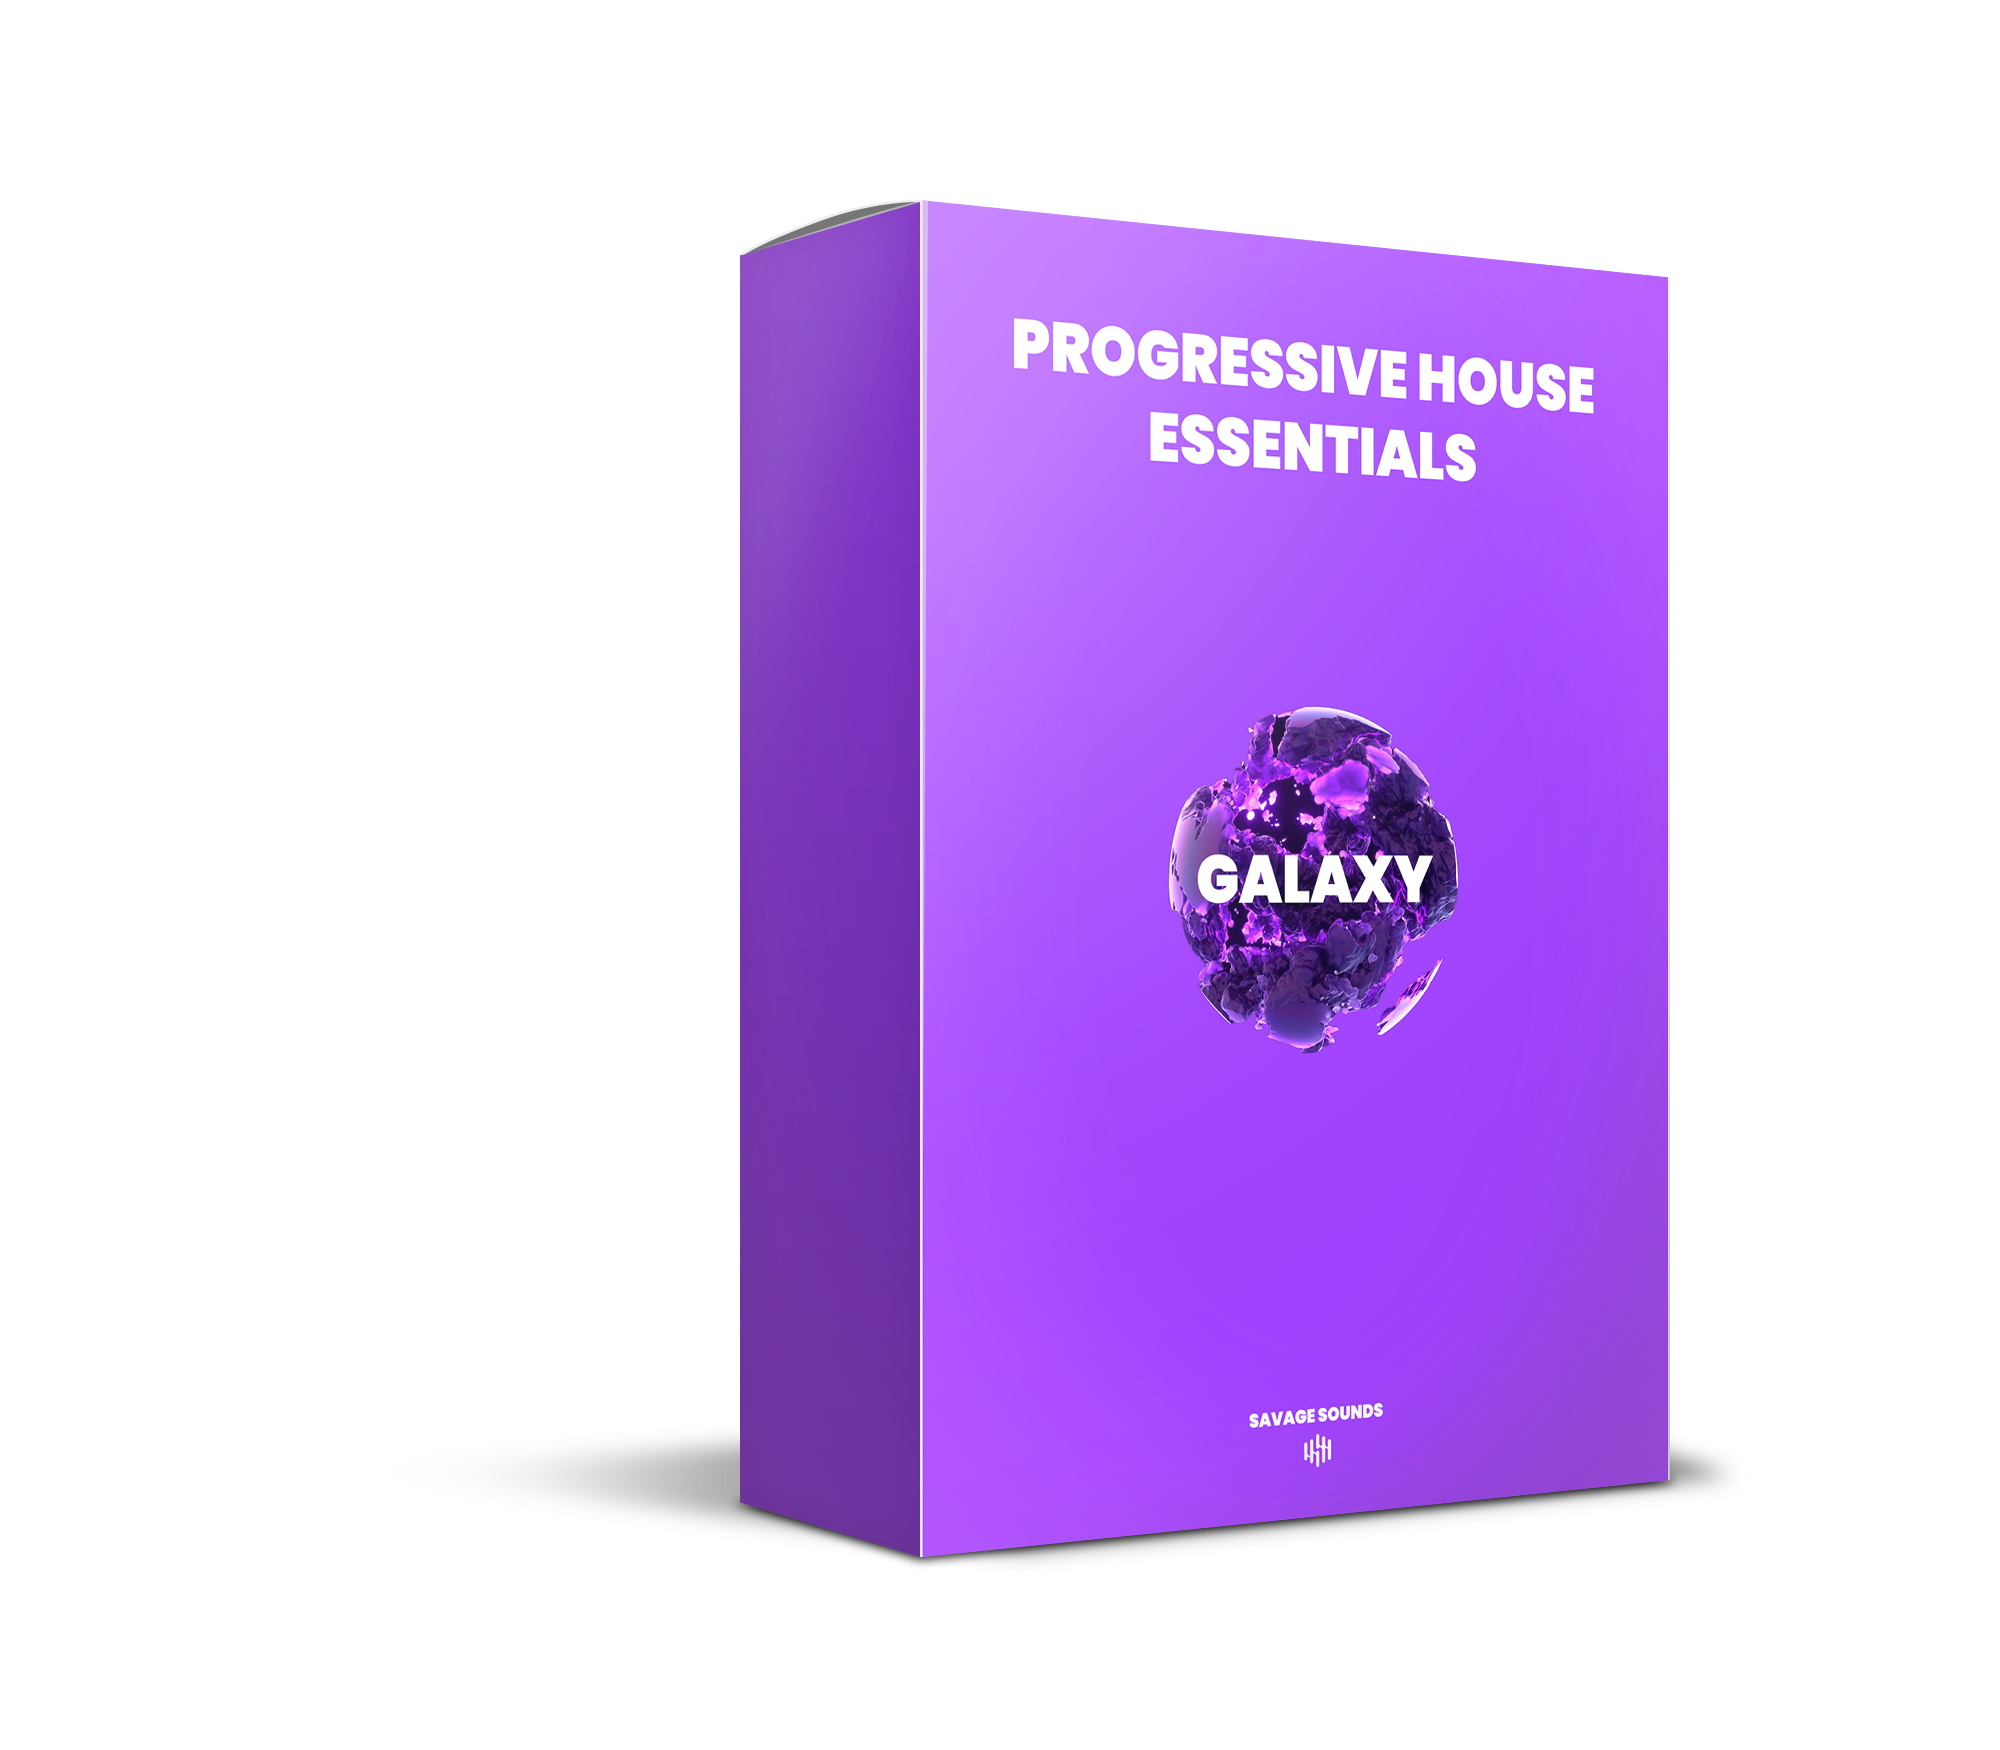 GALAXY Lite - Progressive House Sample Pack